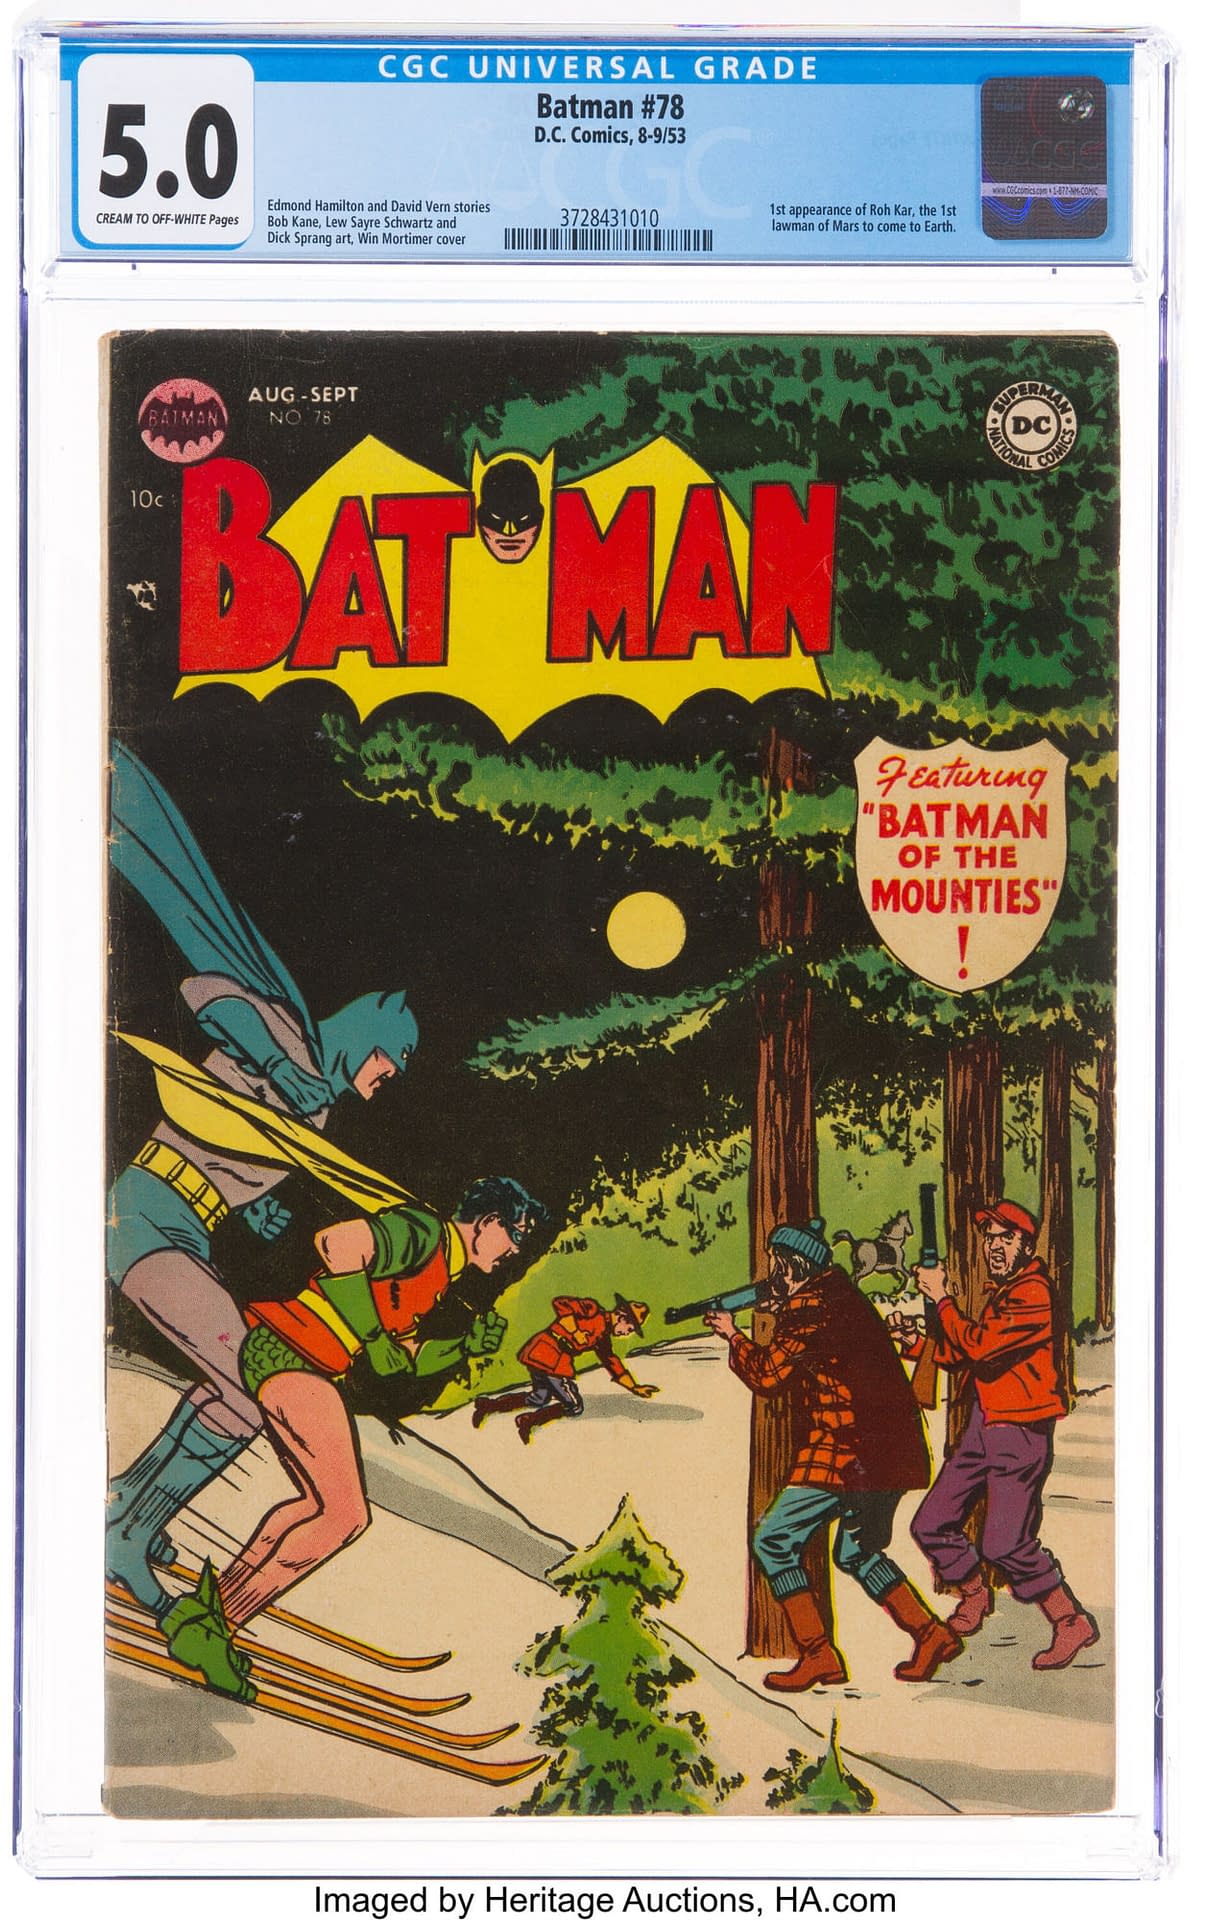 DC Comics' First Martian Manhunter in Batman #78, Up for Auction